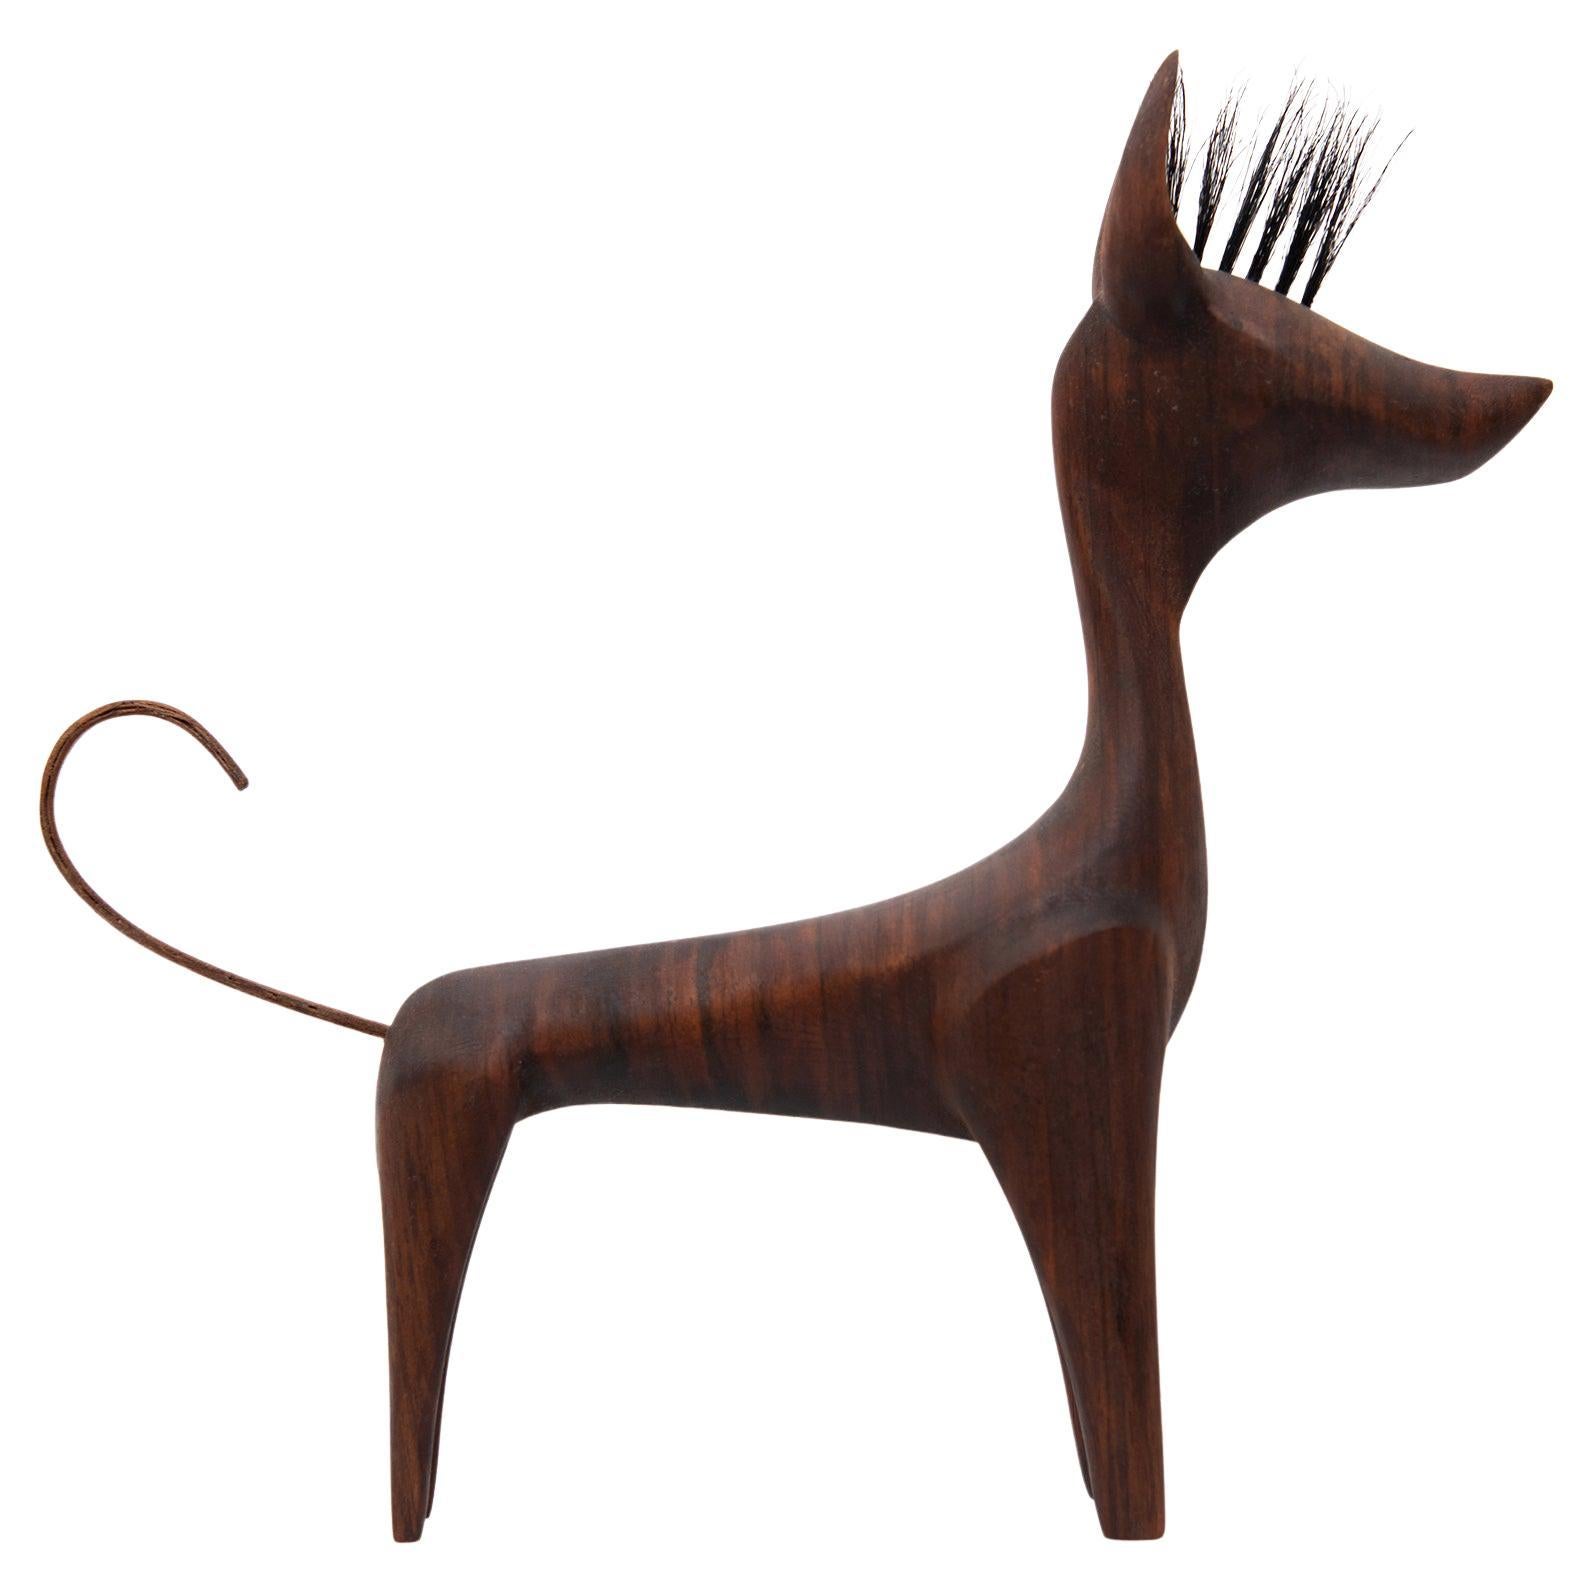 Lolo by Design VA . Xoloitzcuintle Wood Sculpture